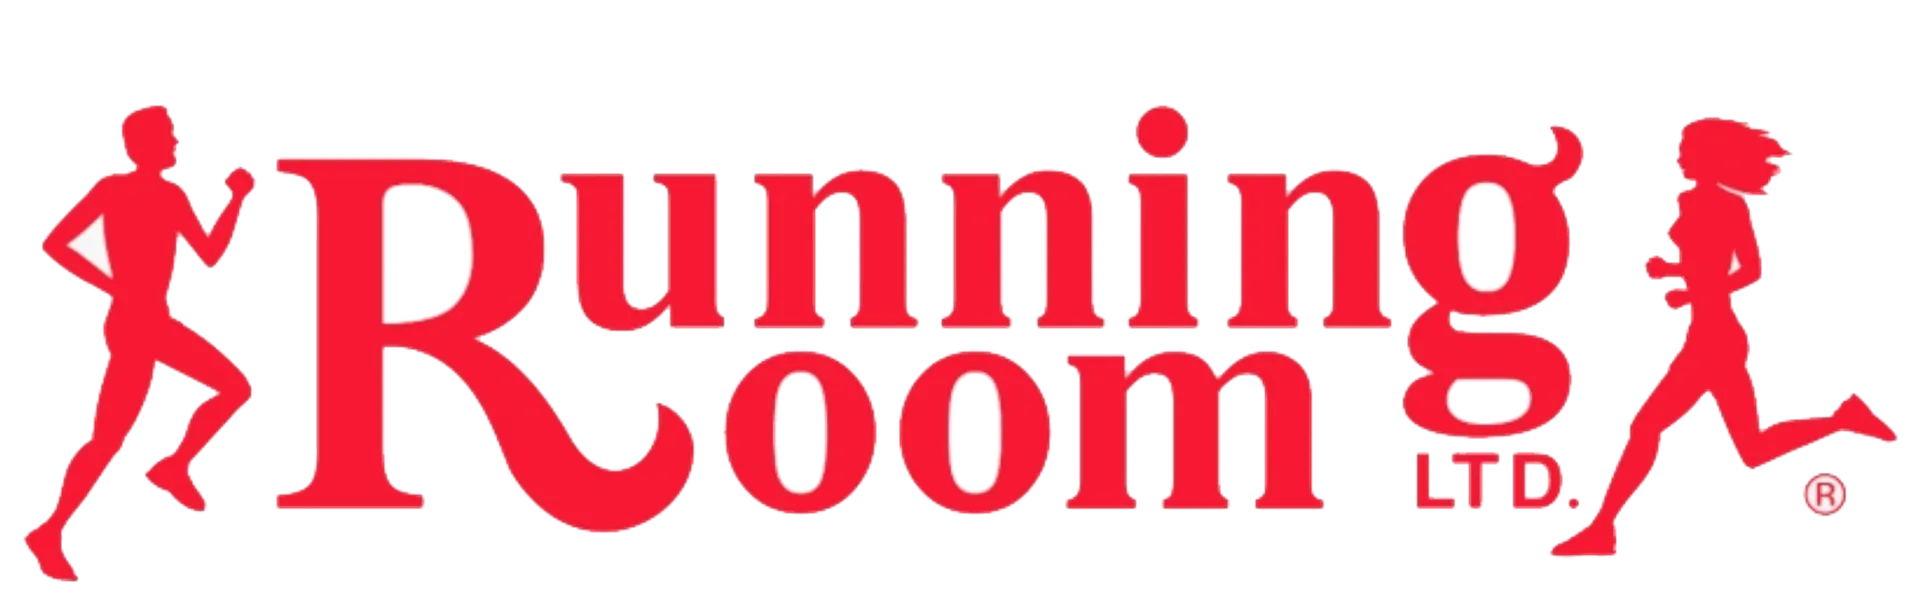 RUNNING ROOM logo de circulaires